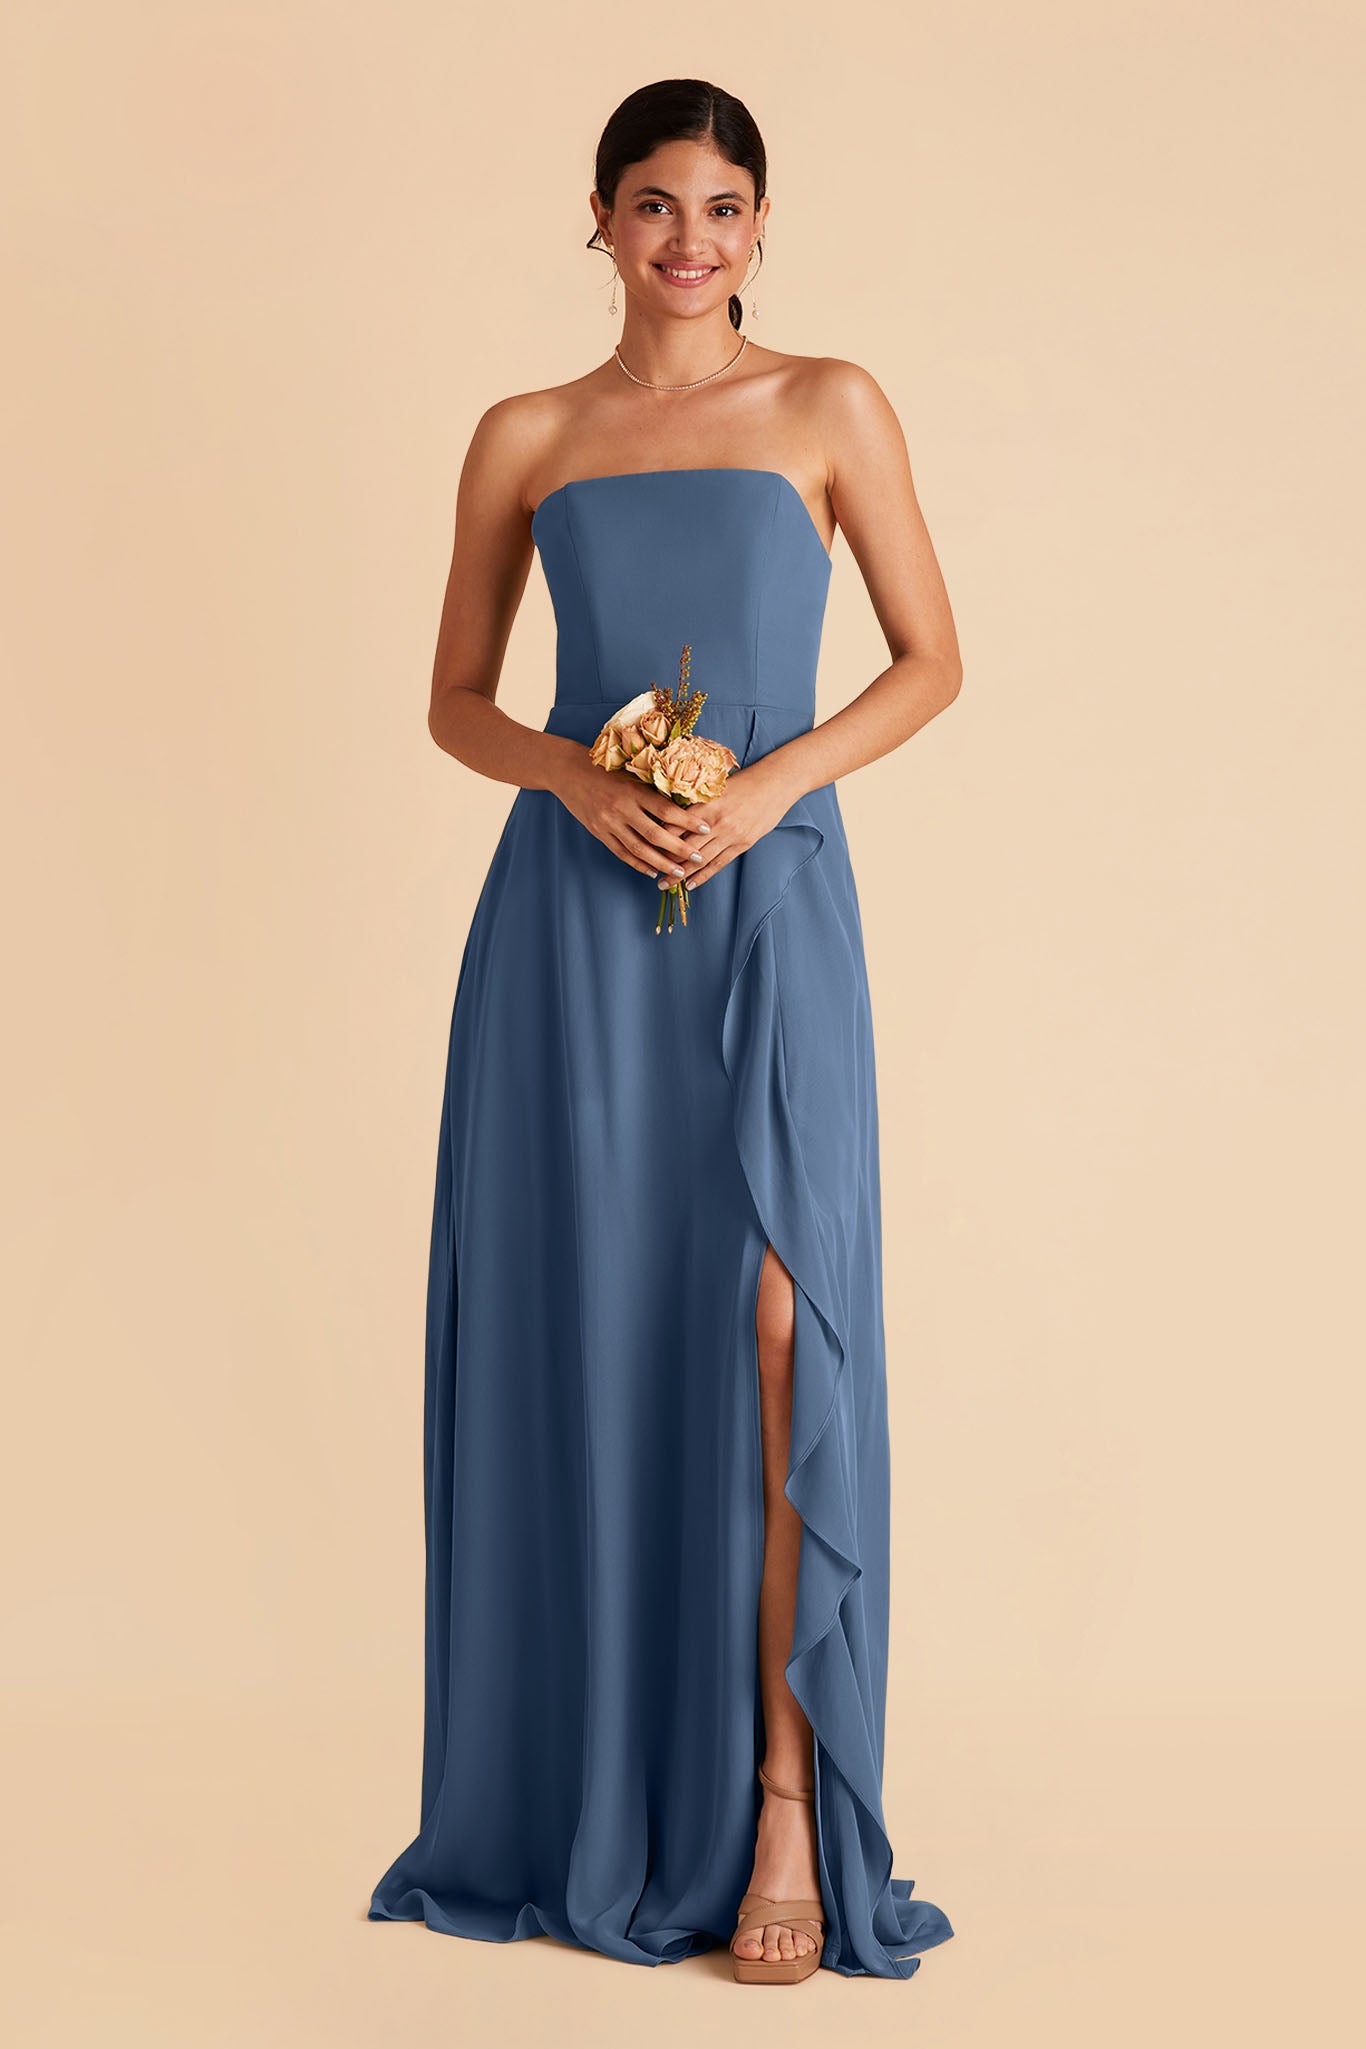 Dusty Blue Bridesmaid Dress Infinity Dress Periwinkle Convertible